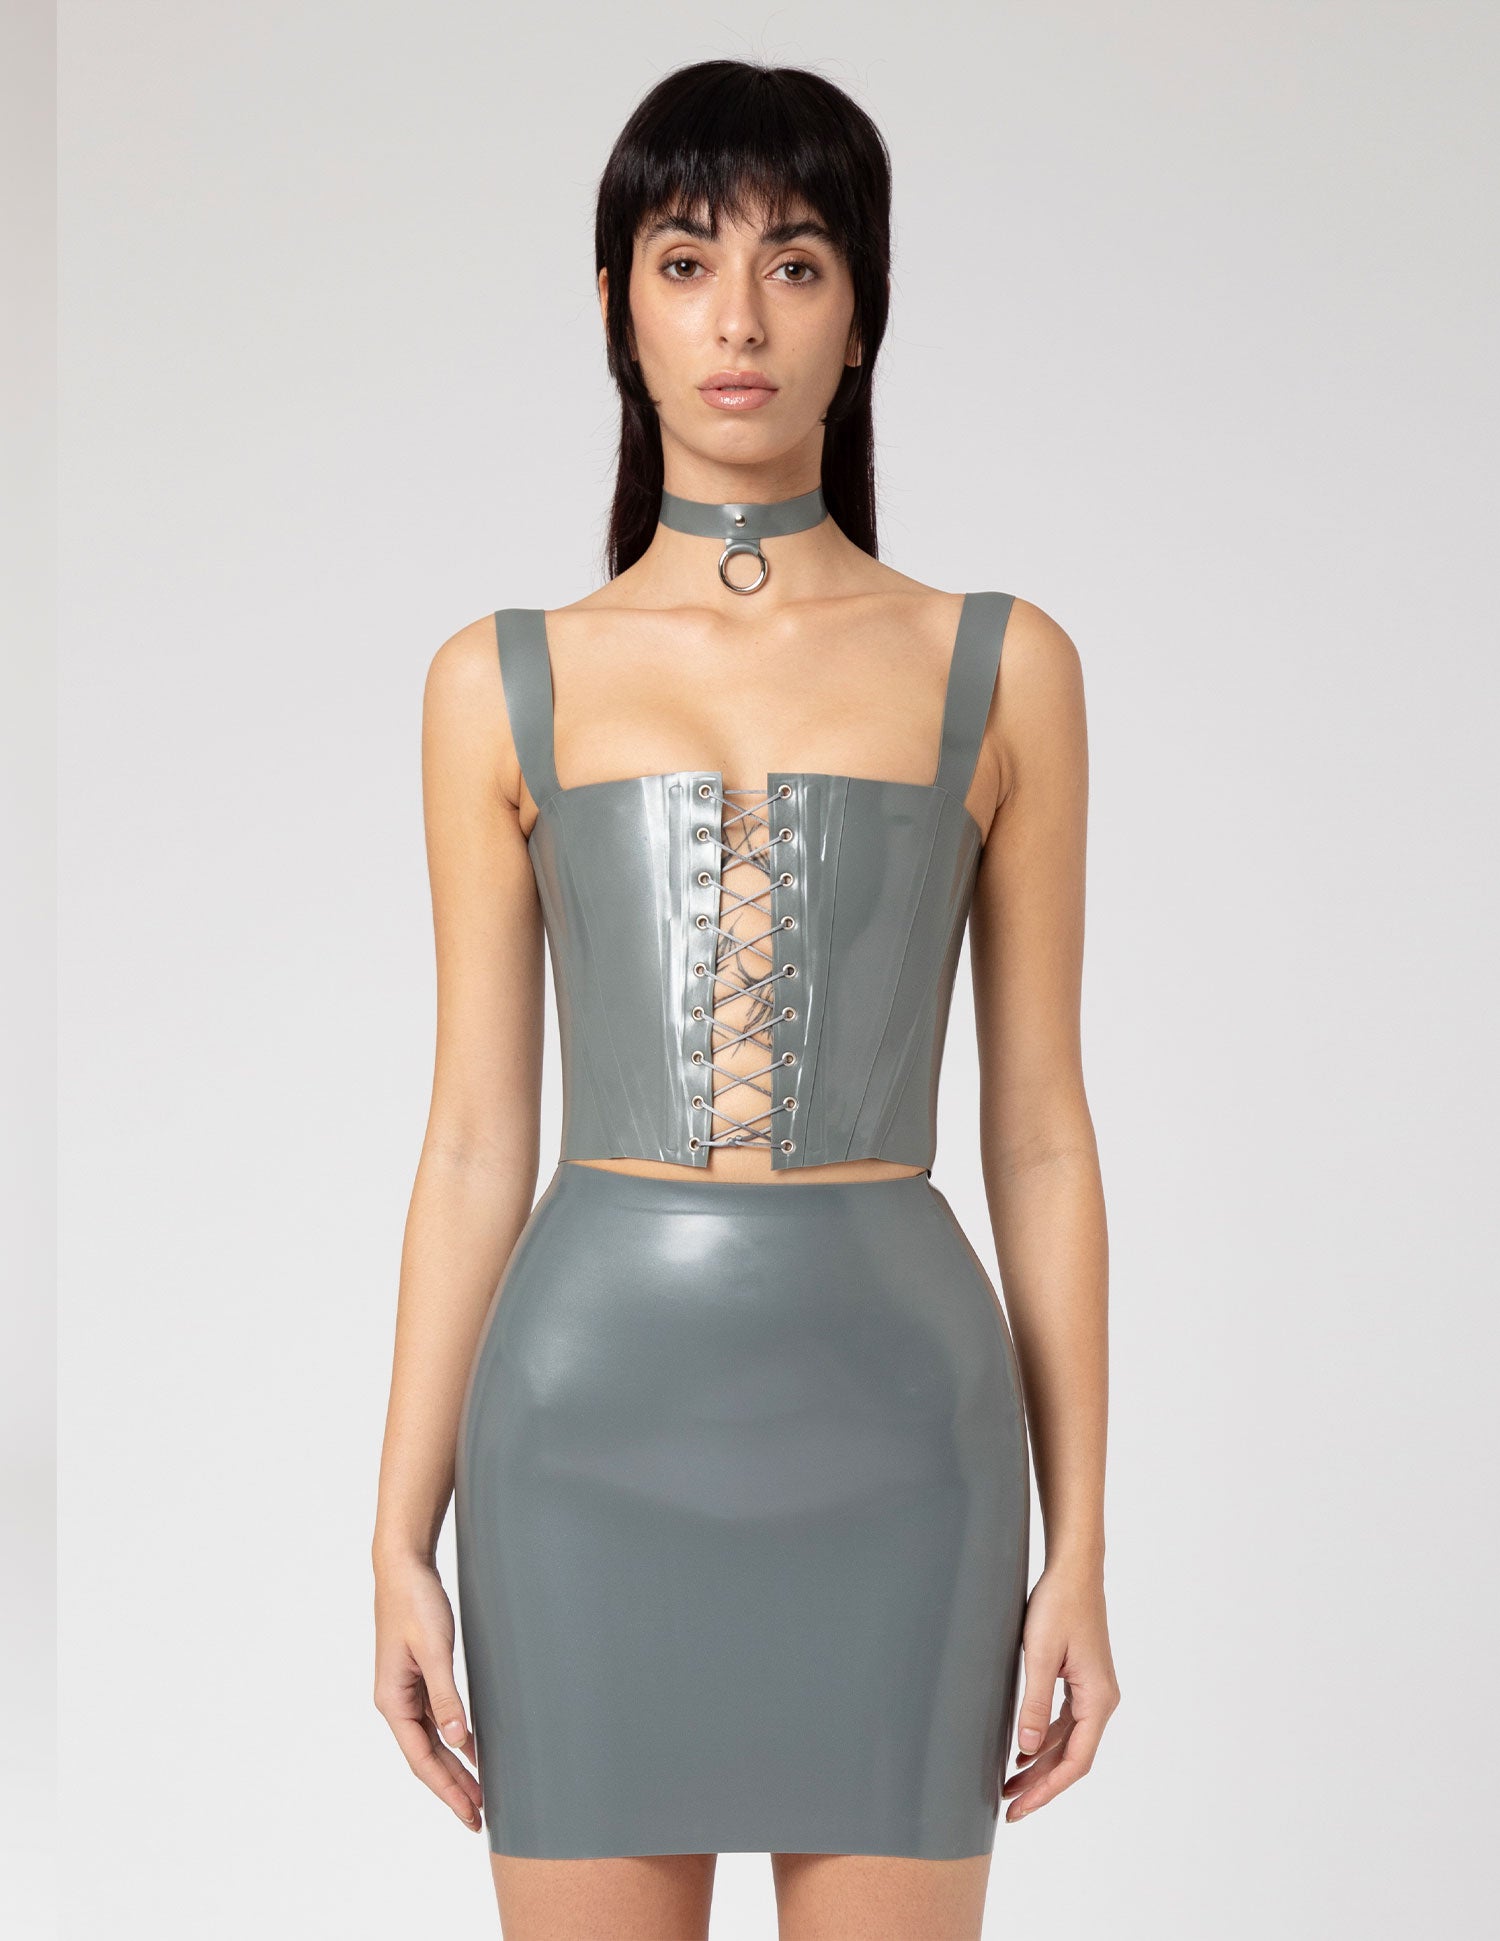 Kim' corset